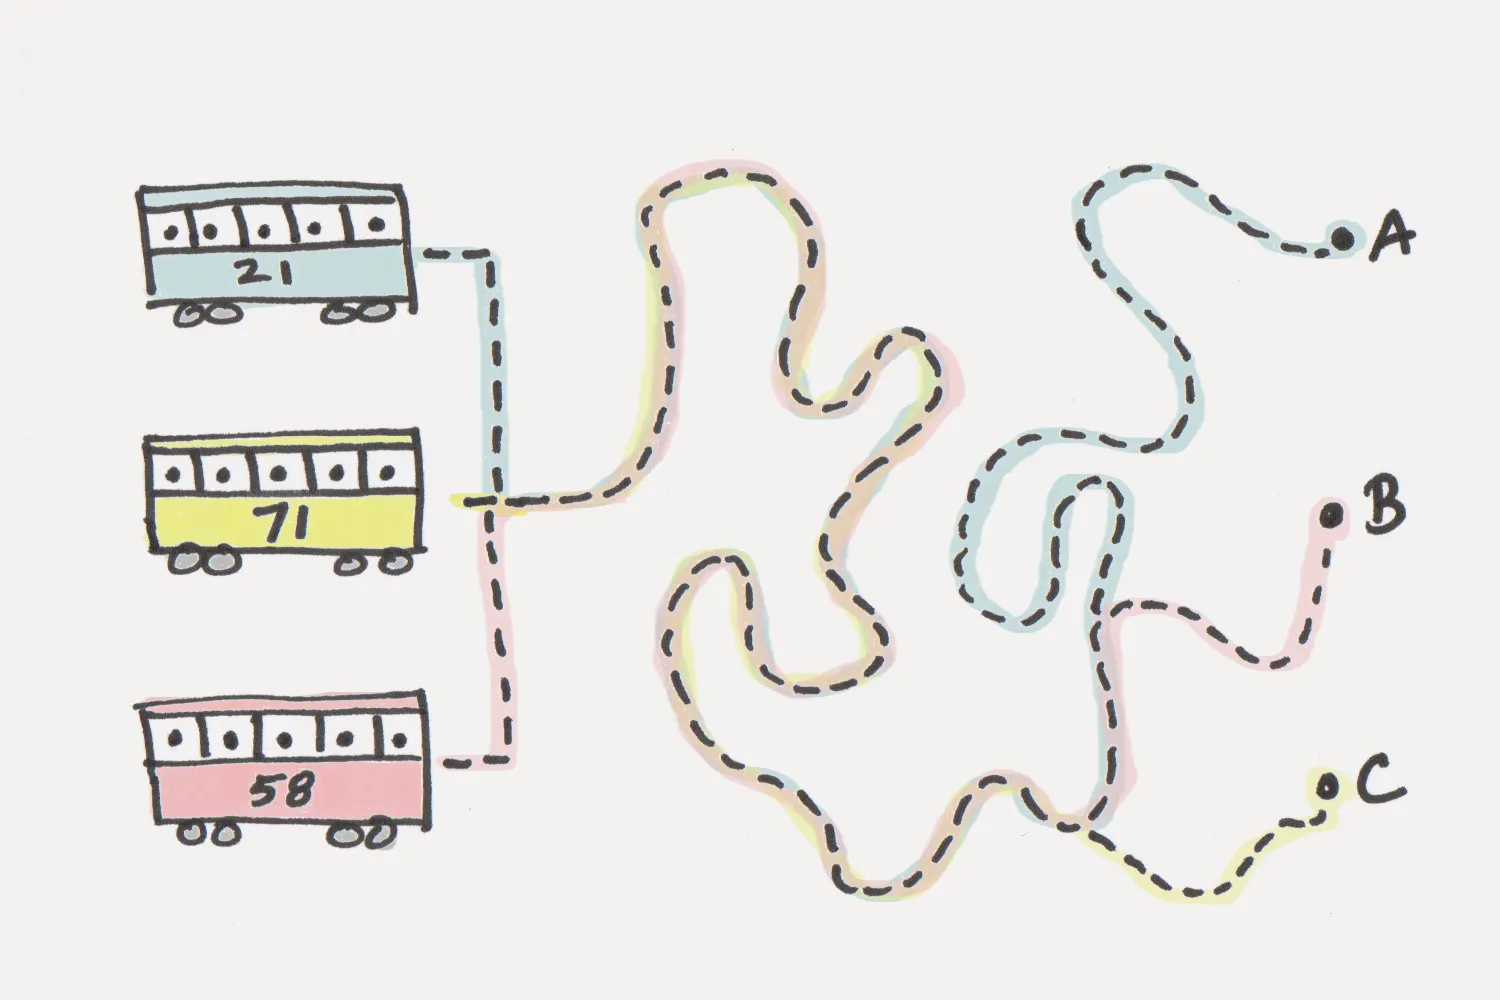 A teoria do ônibus de Helsinki